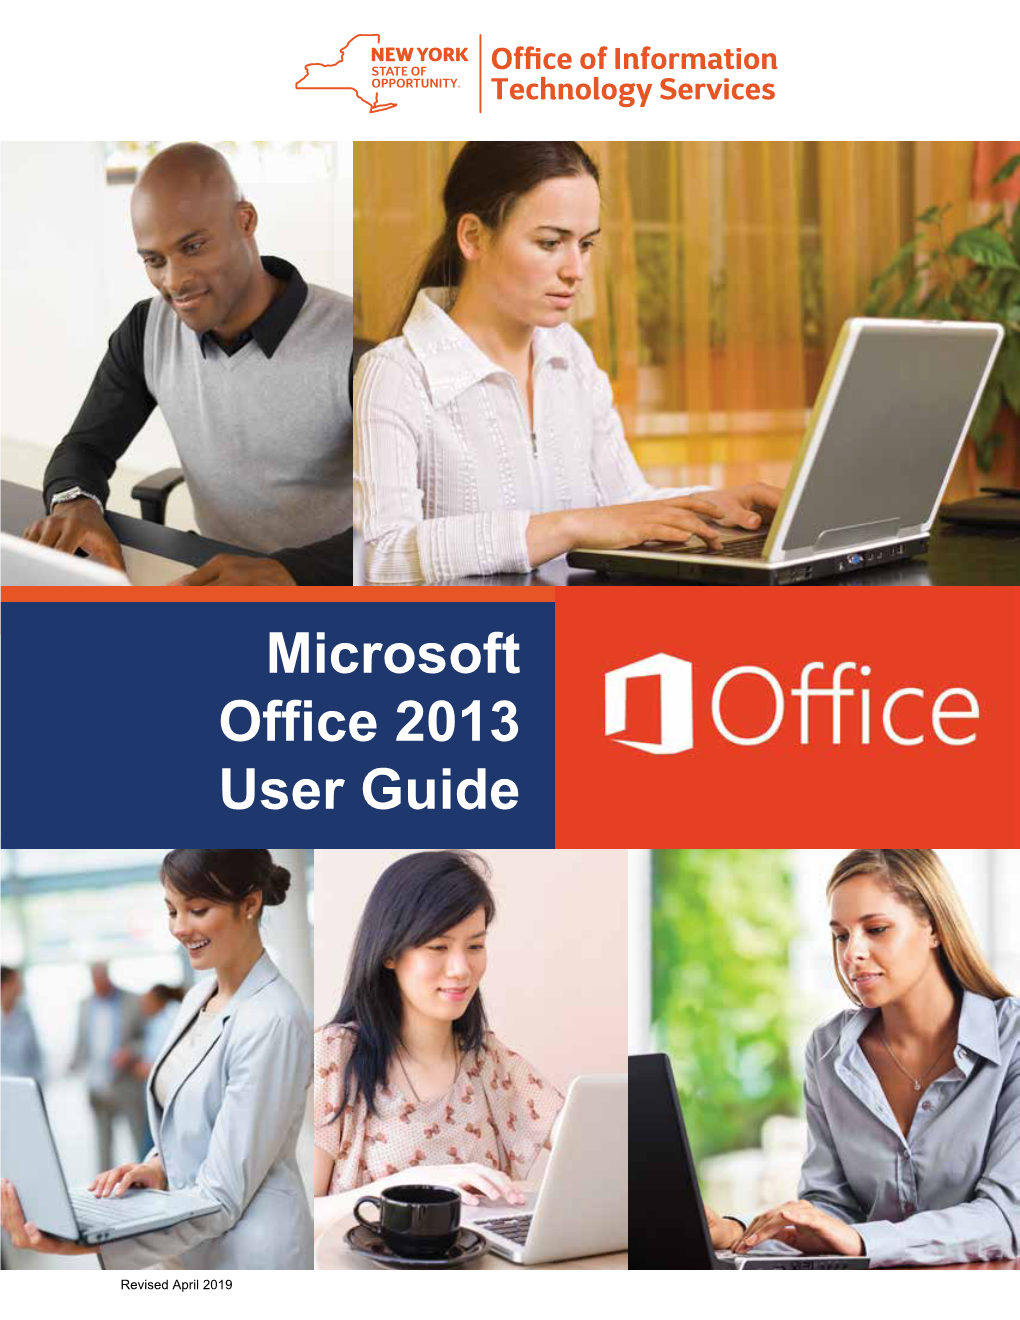 Microsoft Office 2013 User Guide